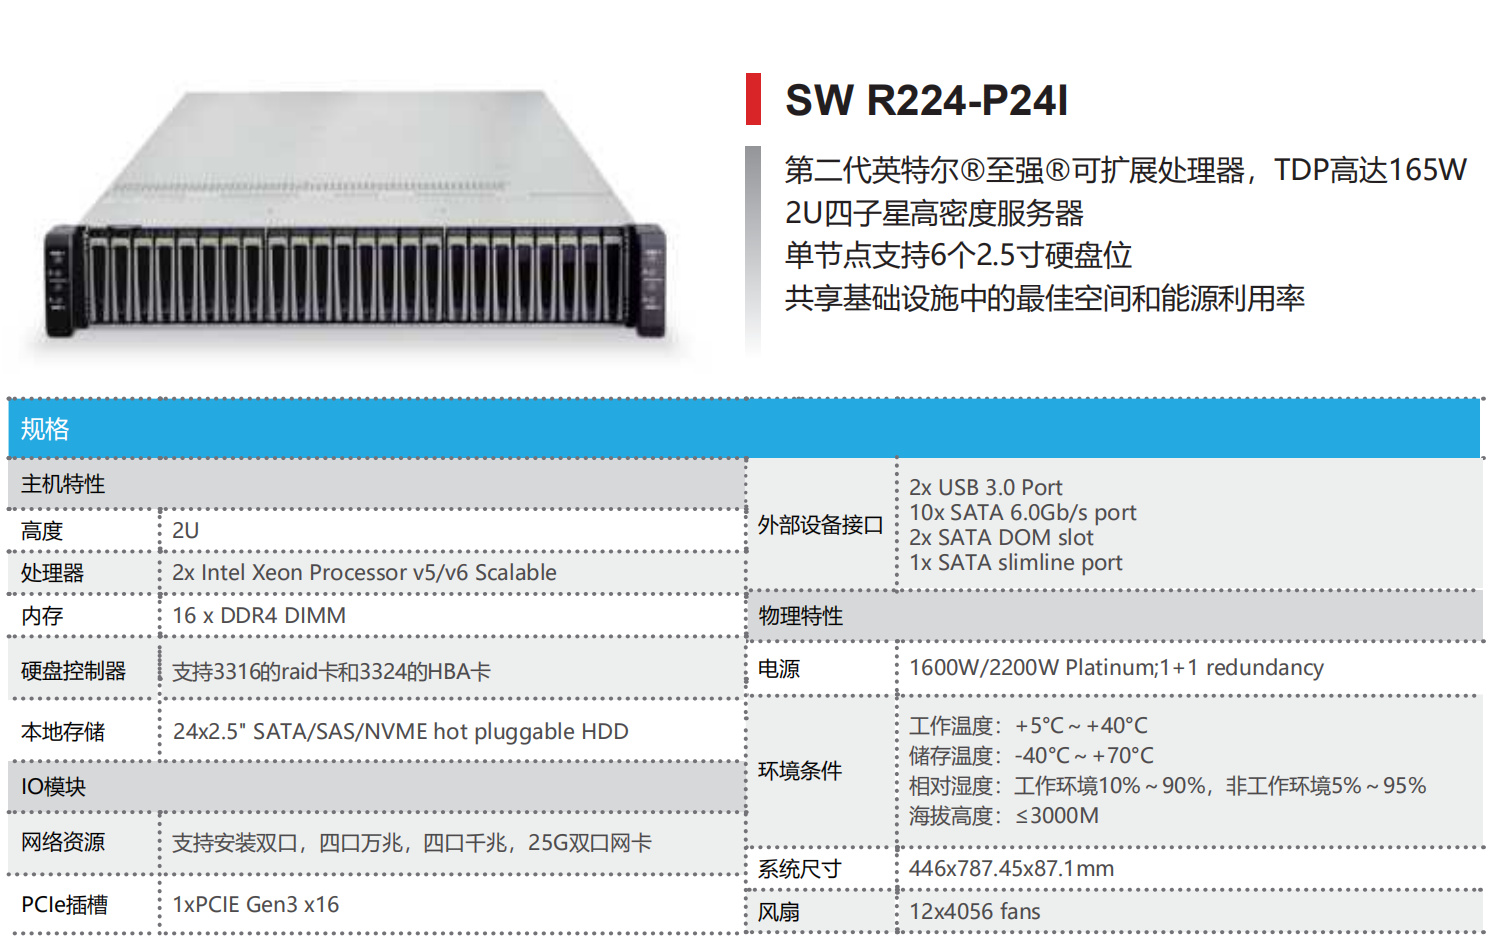 INTEL 平台高密度服务器—SW R224-P24I